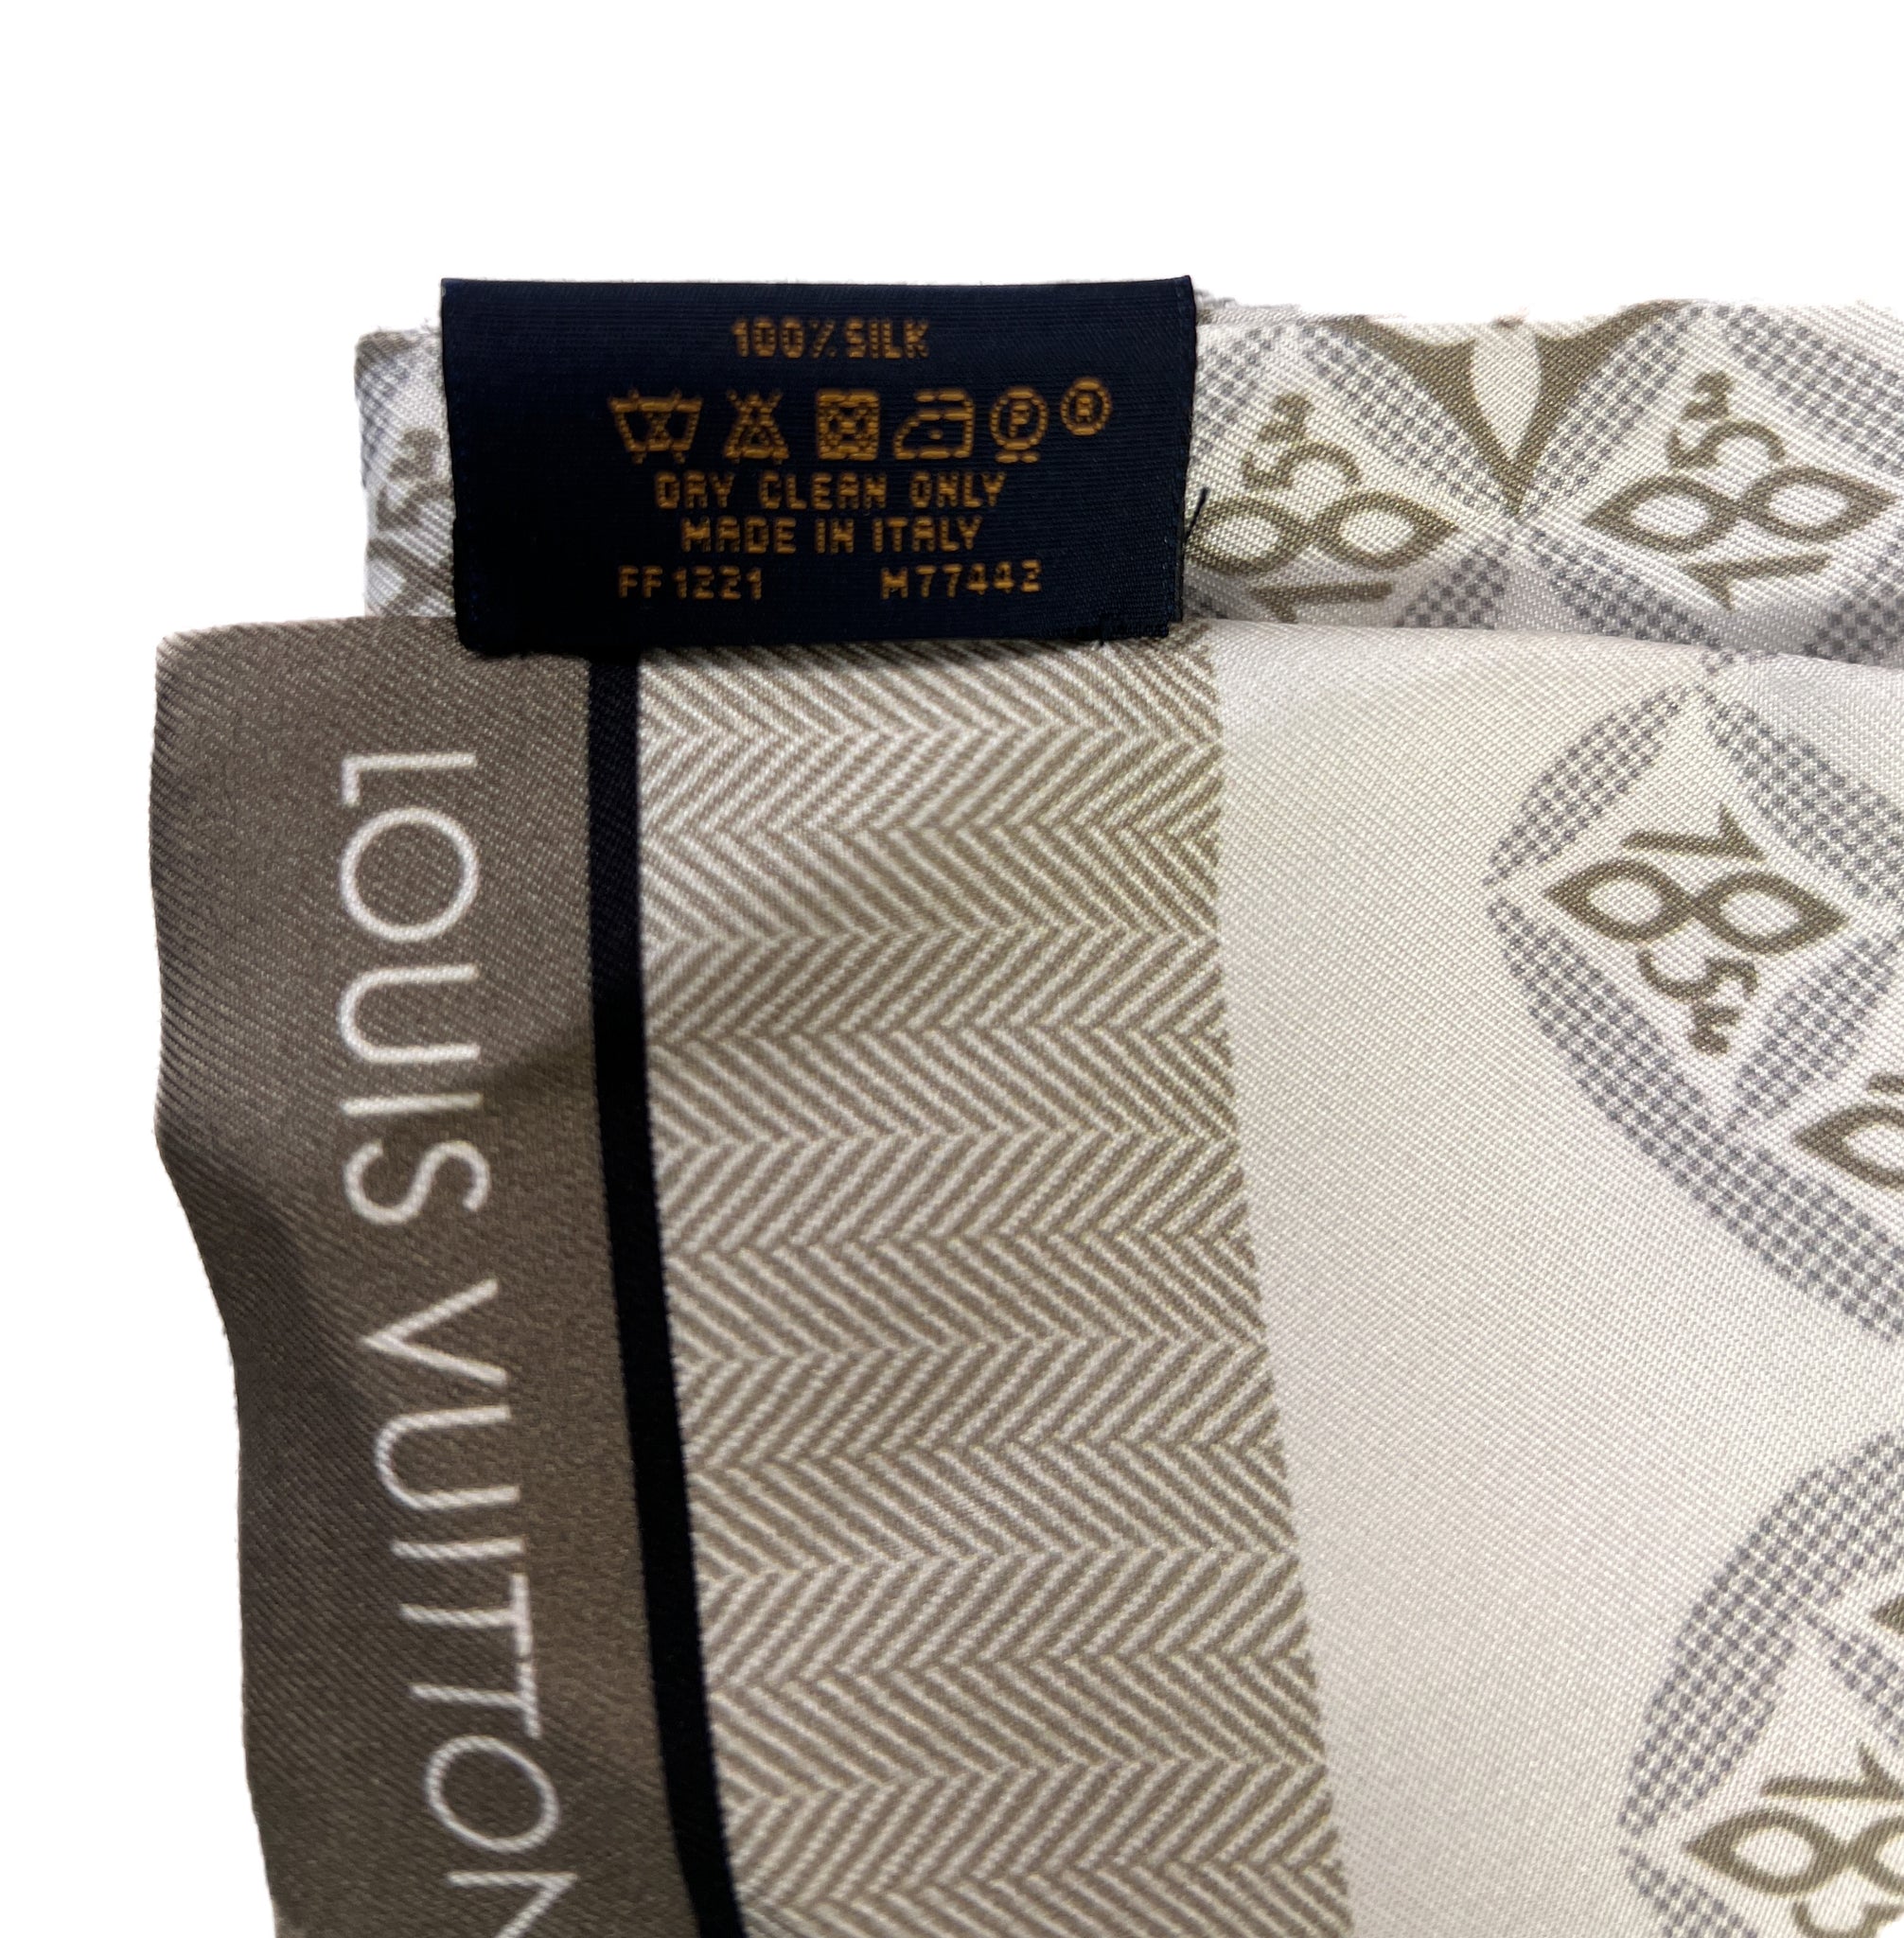 Louis Vuitton since 1854 print twilly – My Girlfriend's Wardrobe LLC